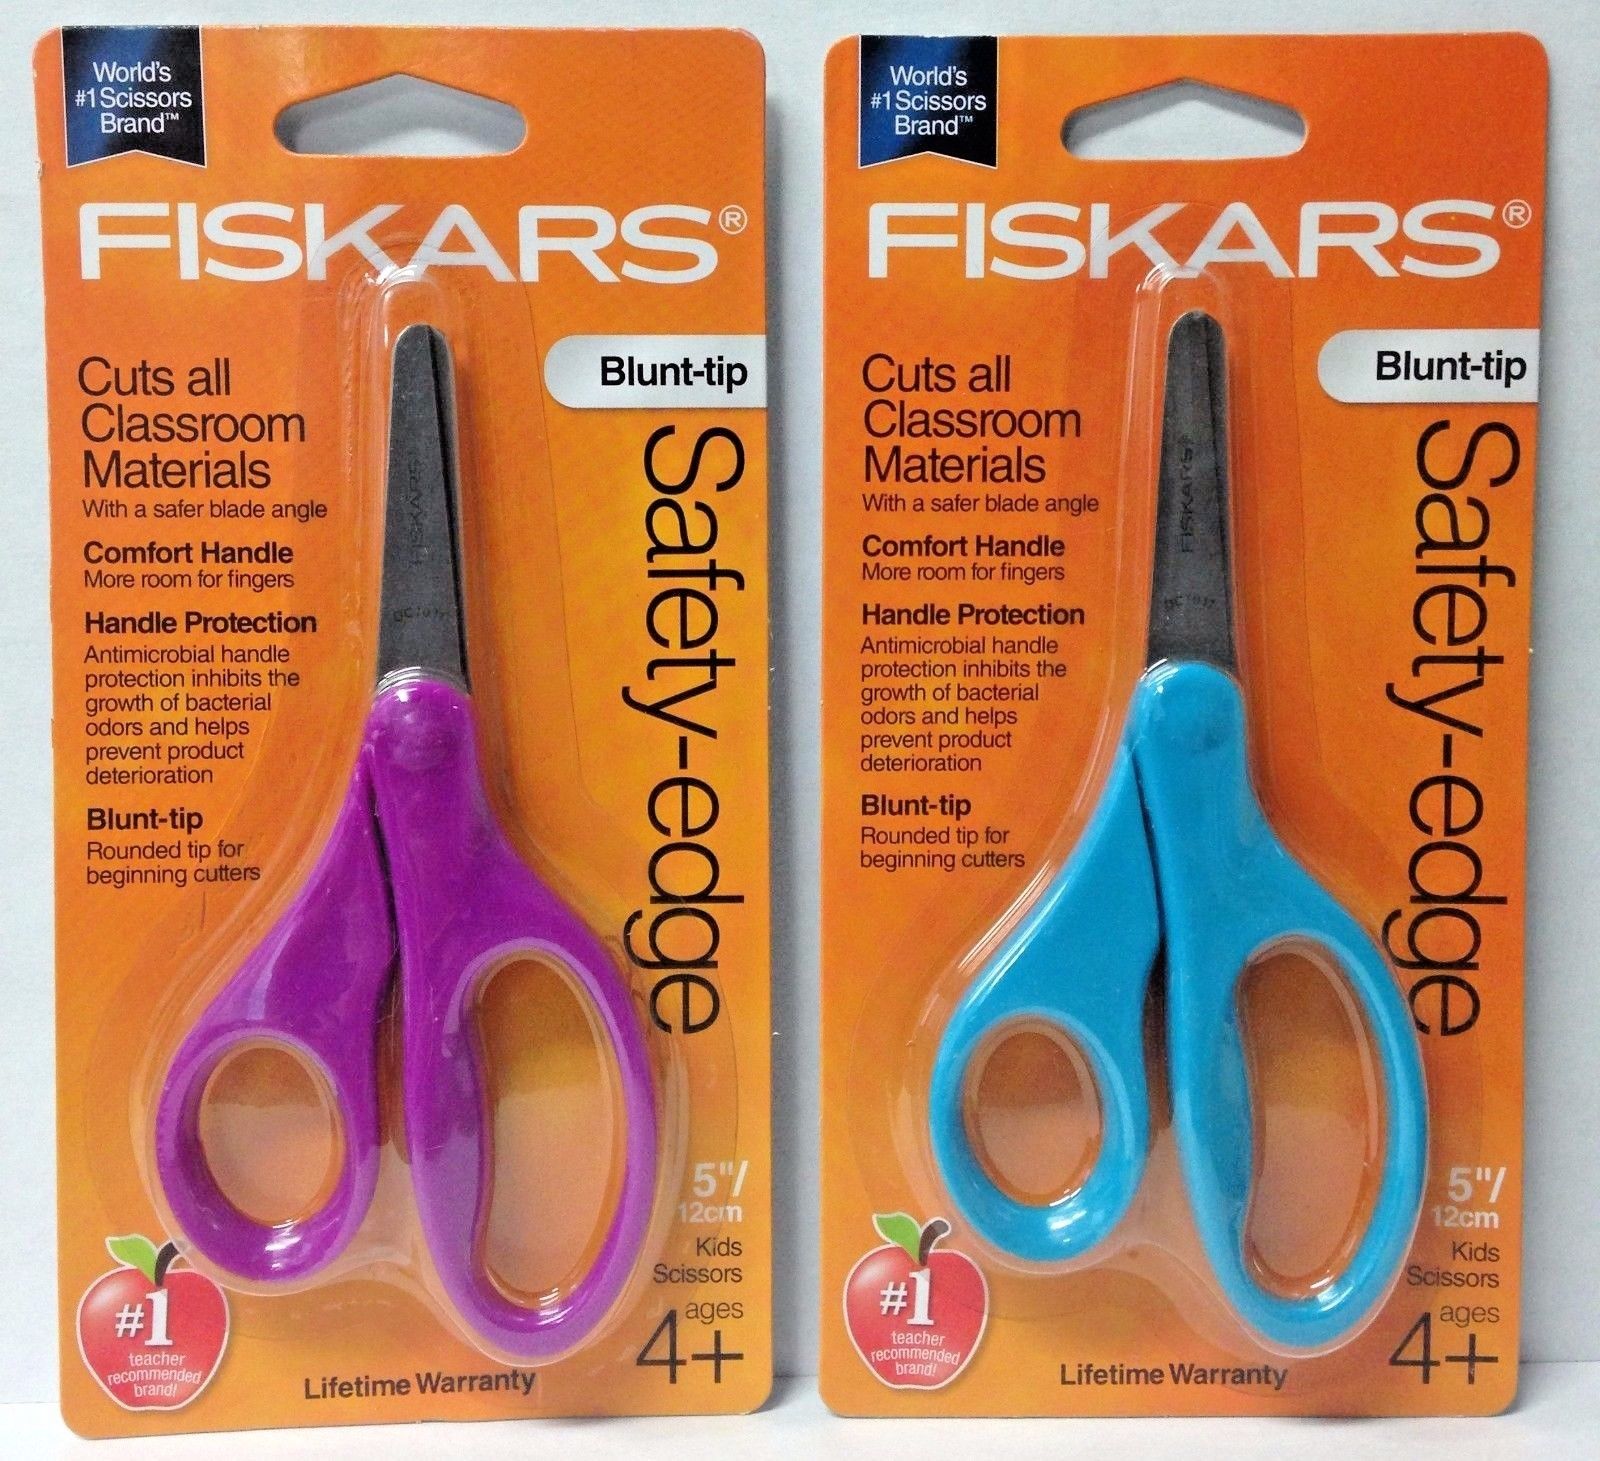 Fiskars 184580 7 Color Change Student Scissors 1pc.